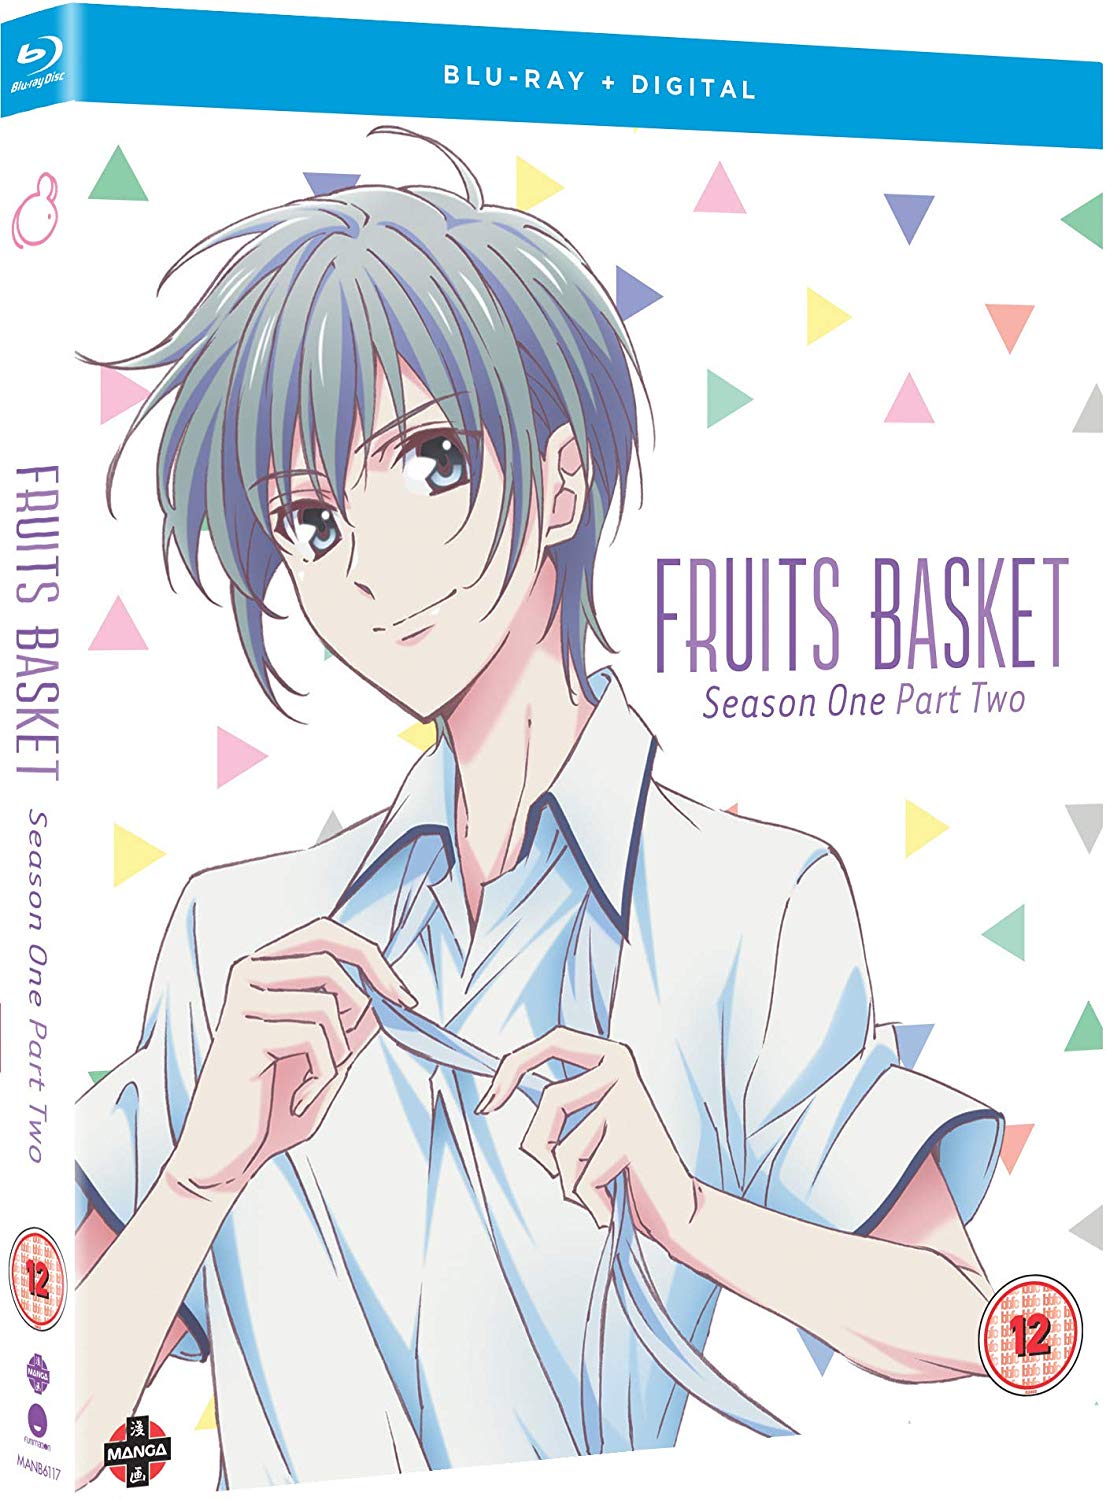 Fruits Basket Season 2 Episode 15 Review